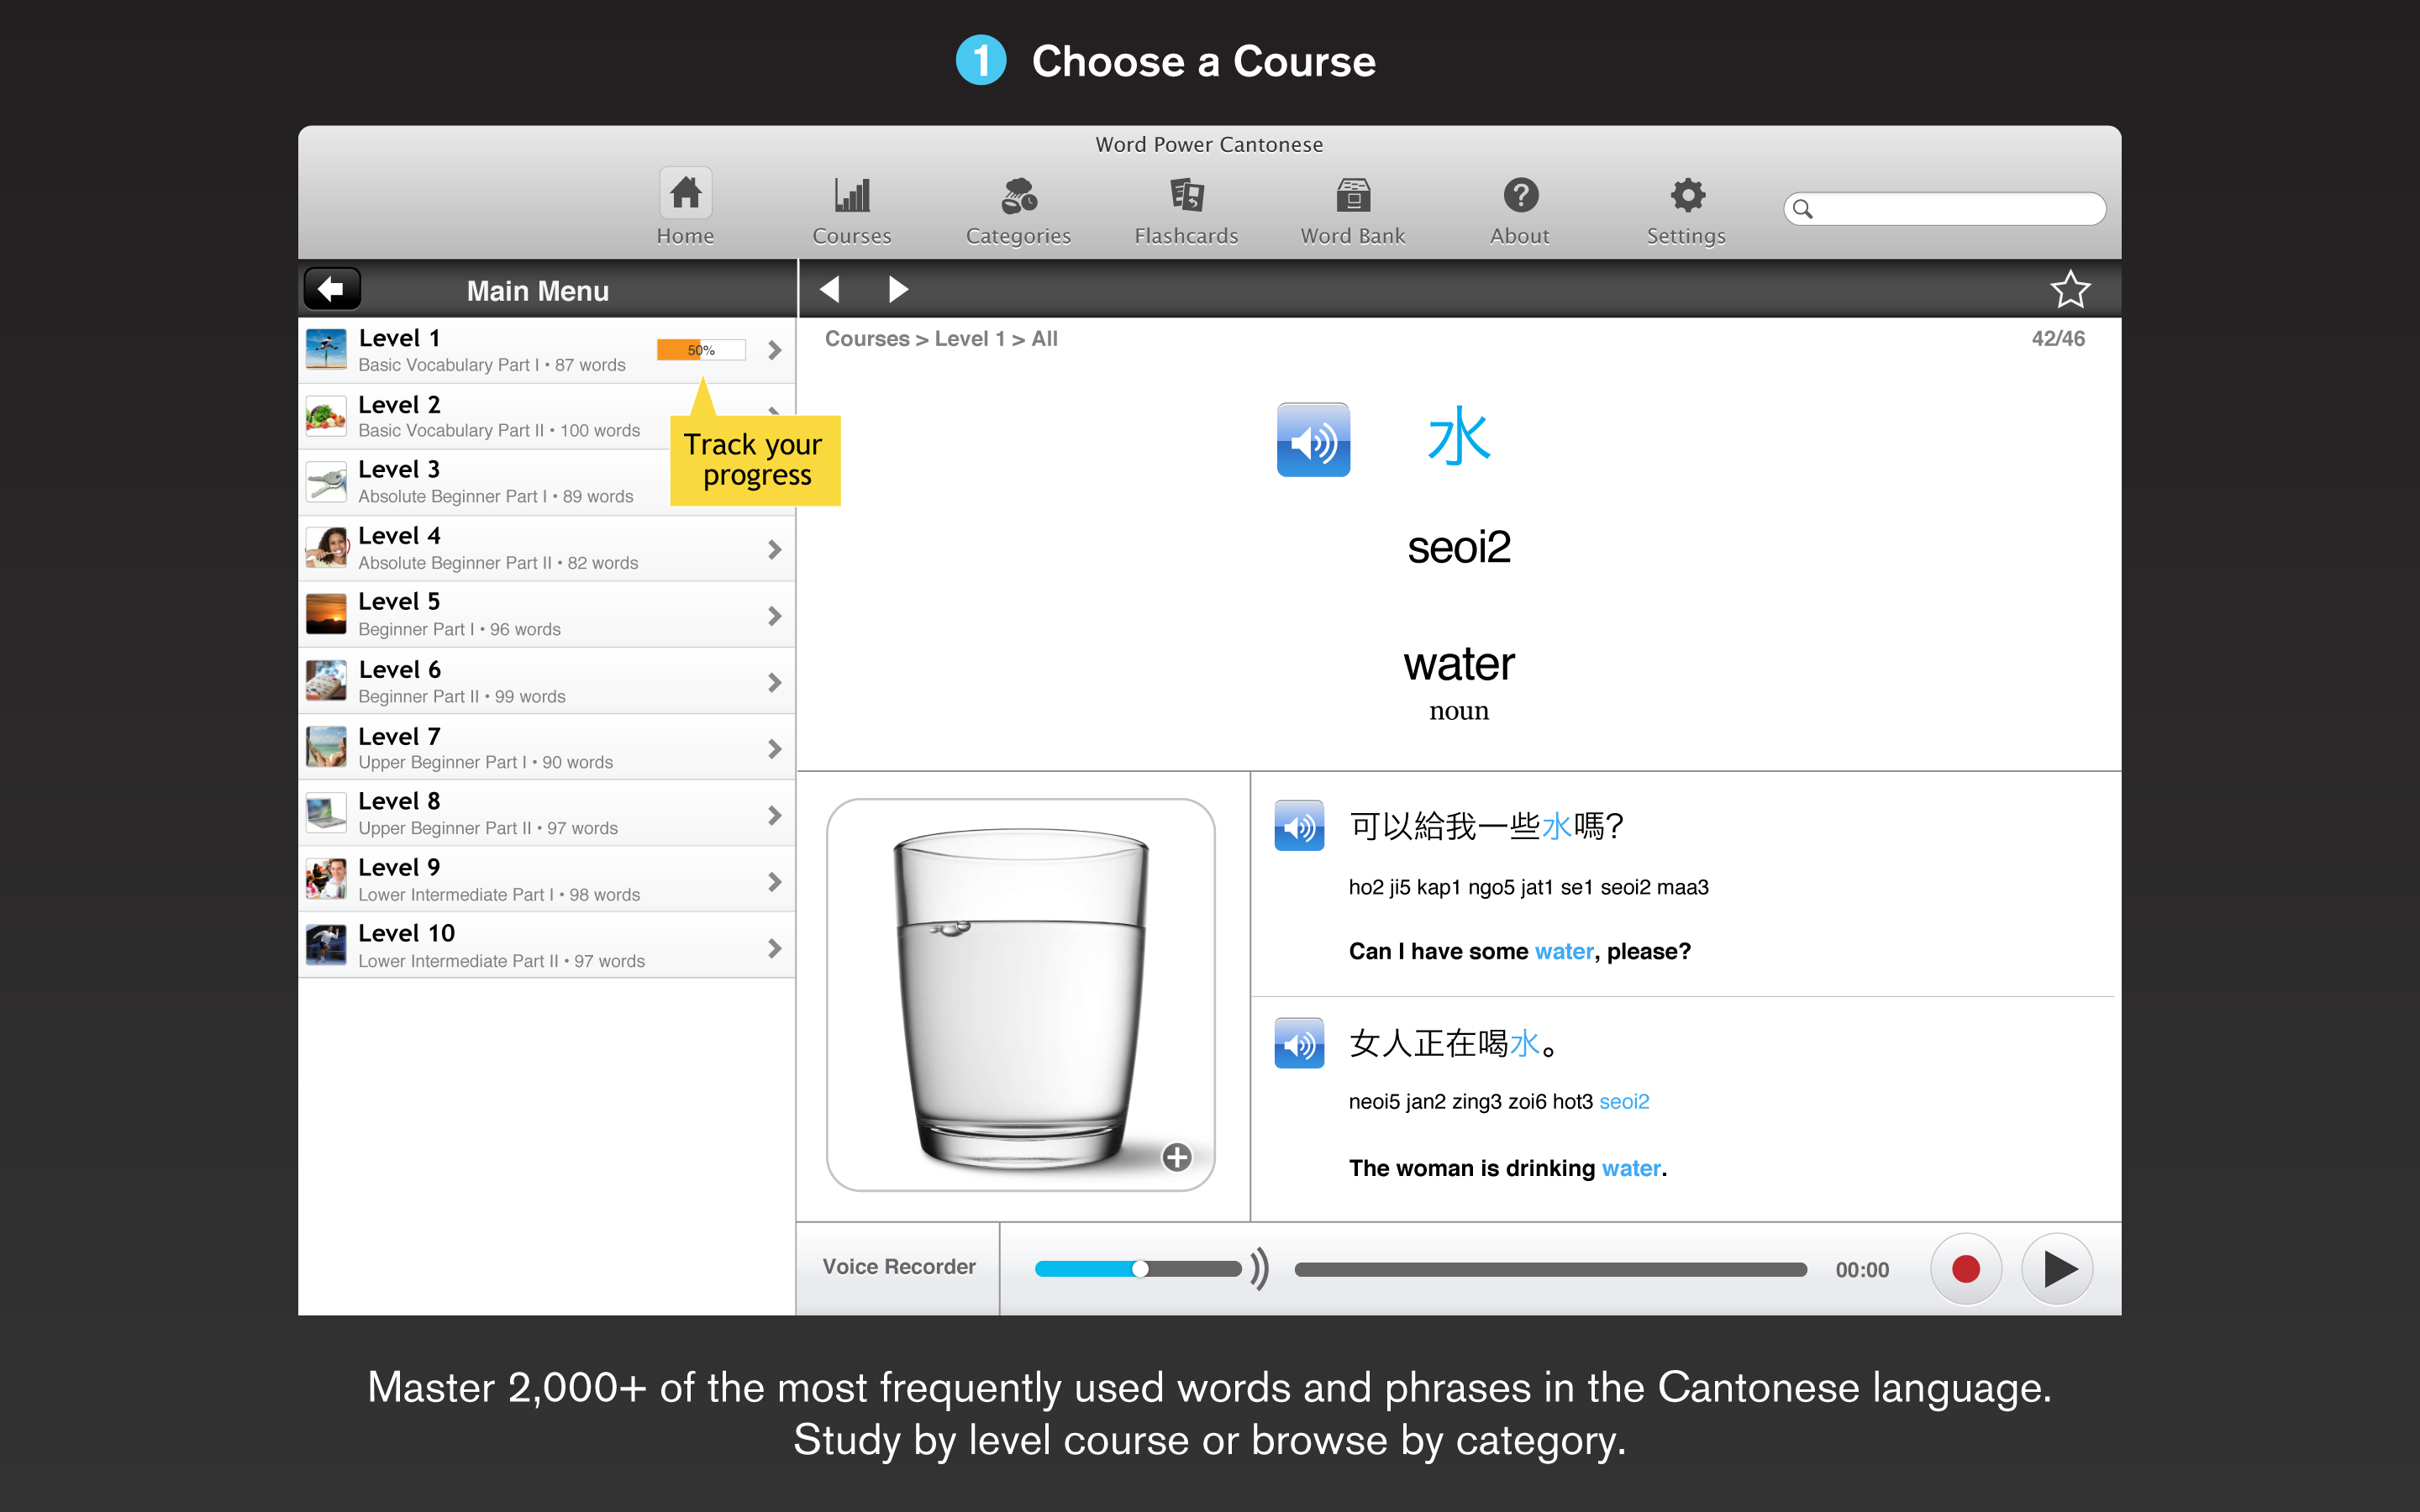 Screenshot 1 - Learn Cantonese Gengo WordPower 